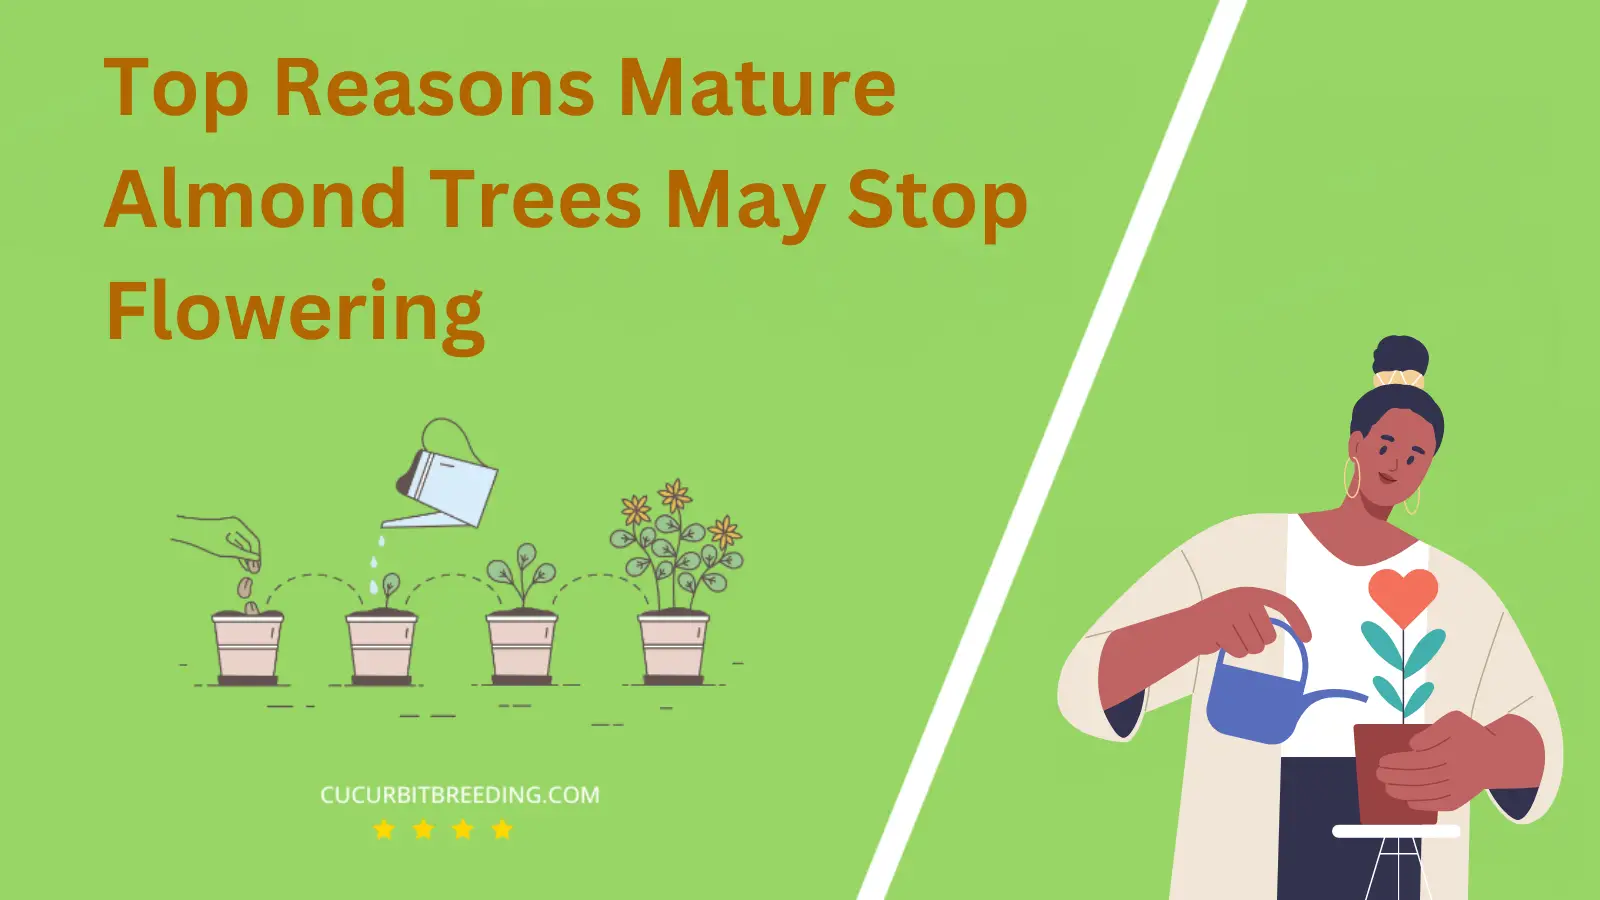 Top Reasons Mature Almond Trees May Stop Flowering